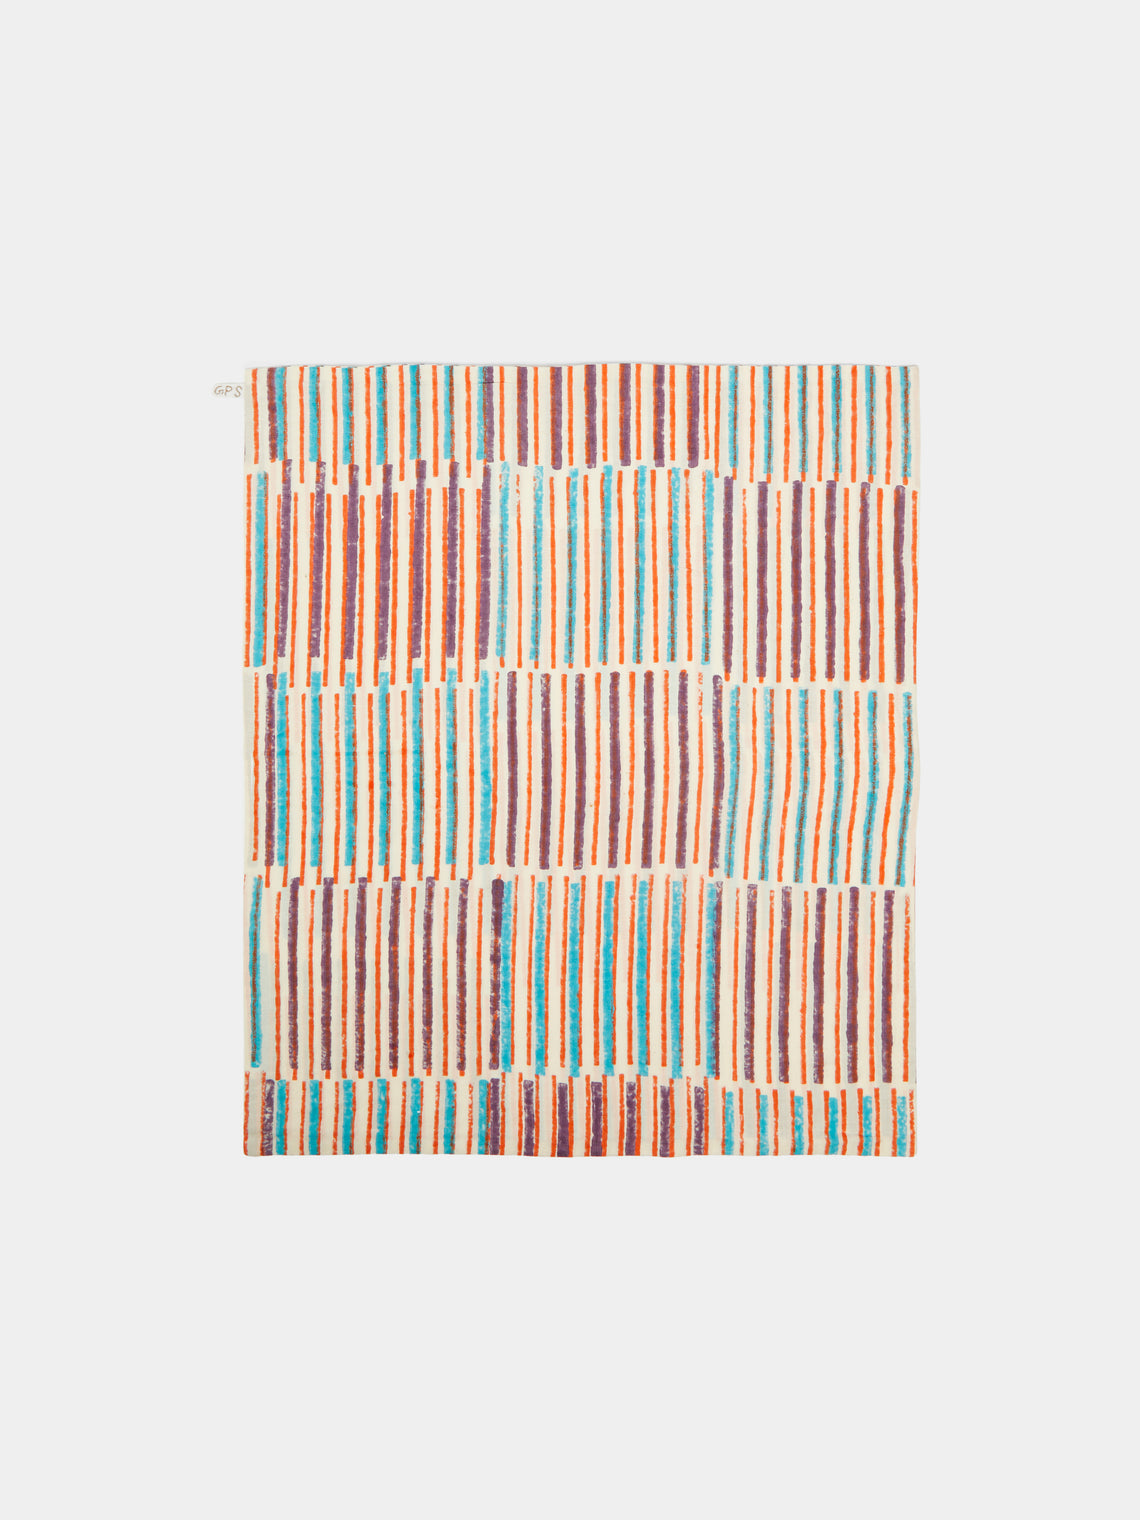 Gregory Parkinson - Sunset Stripe Block-Printed Cotton Napkins (Set of 6) - Multiple - ABASK - 